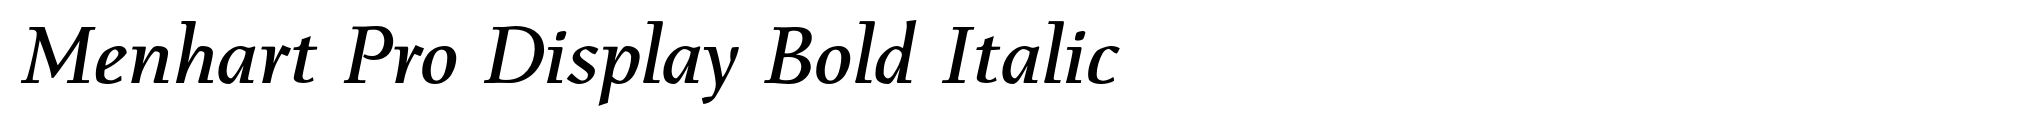 Menhart Pro Display Bold Italic image